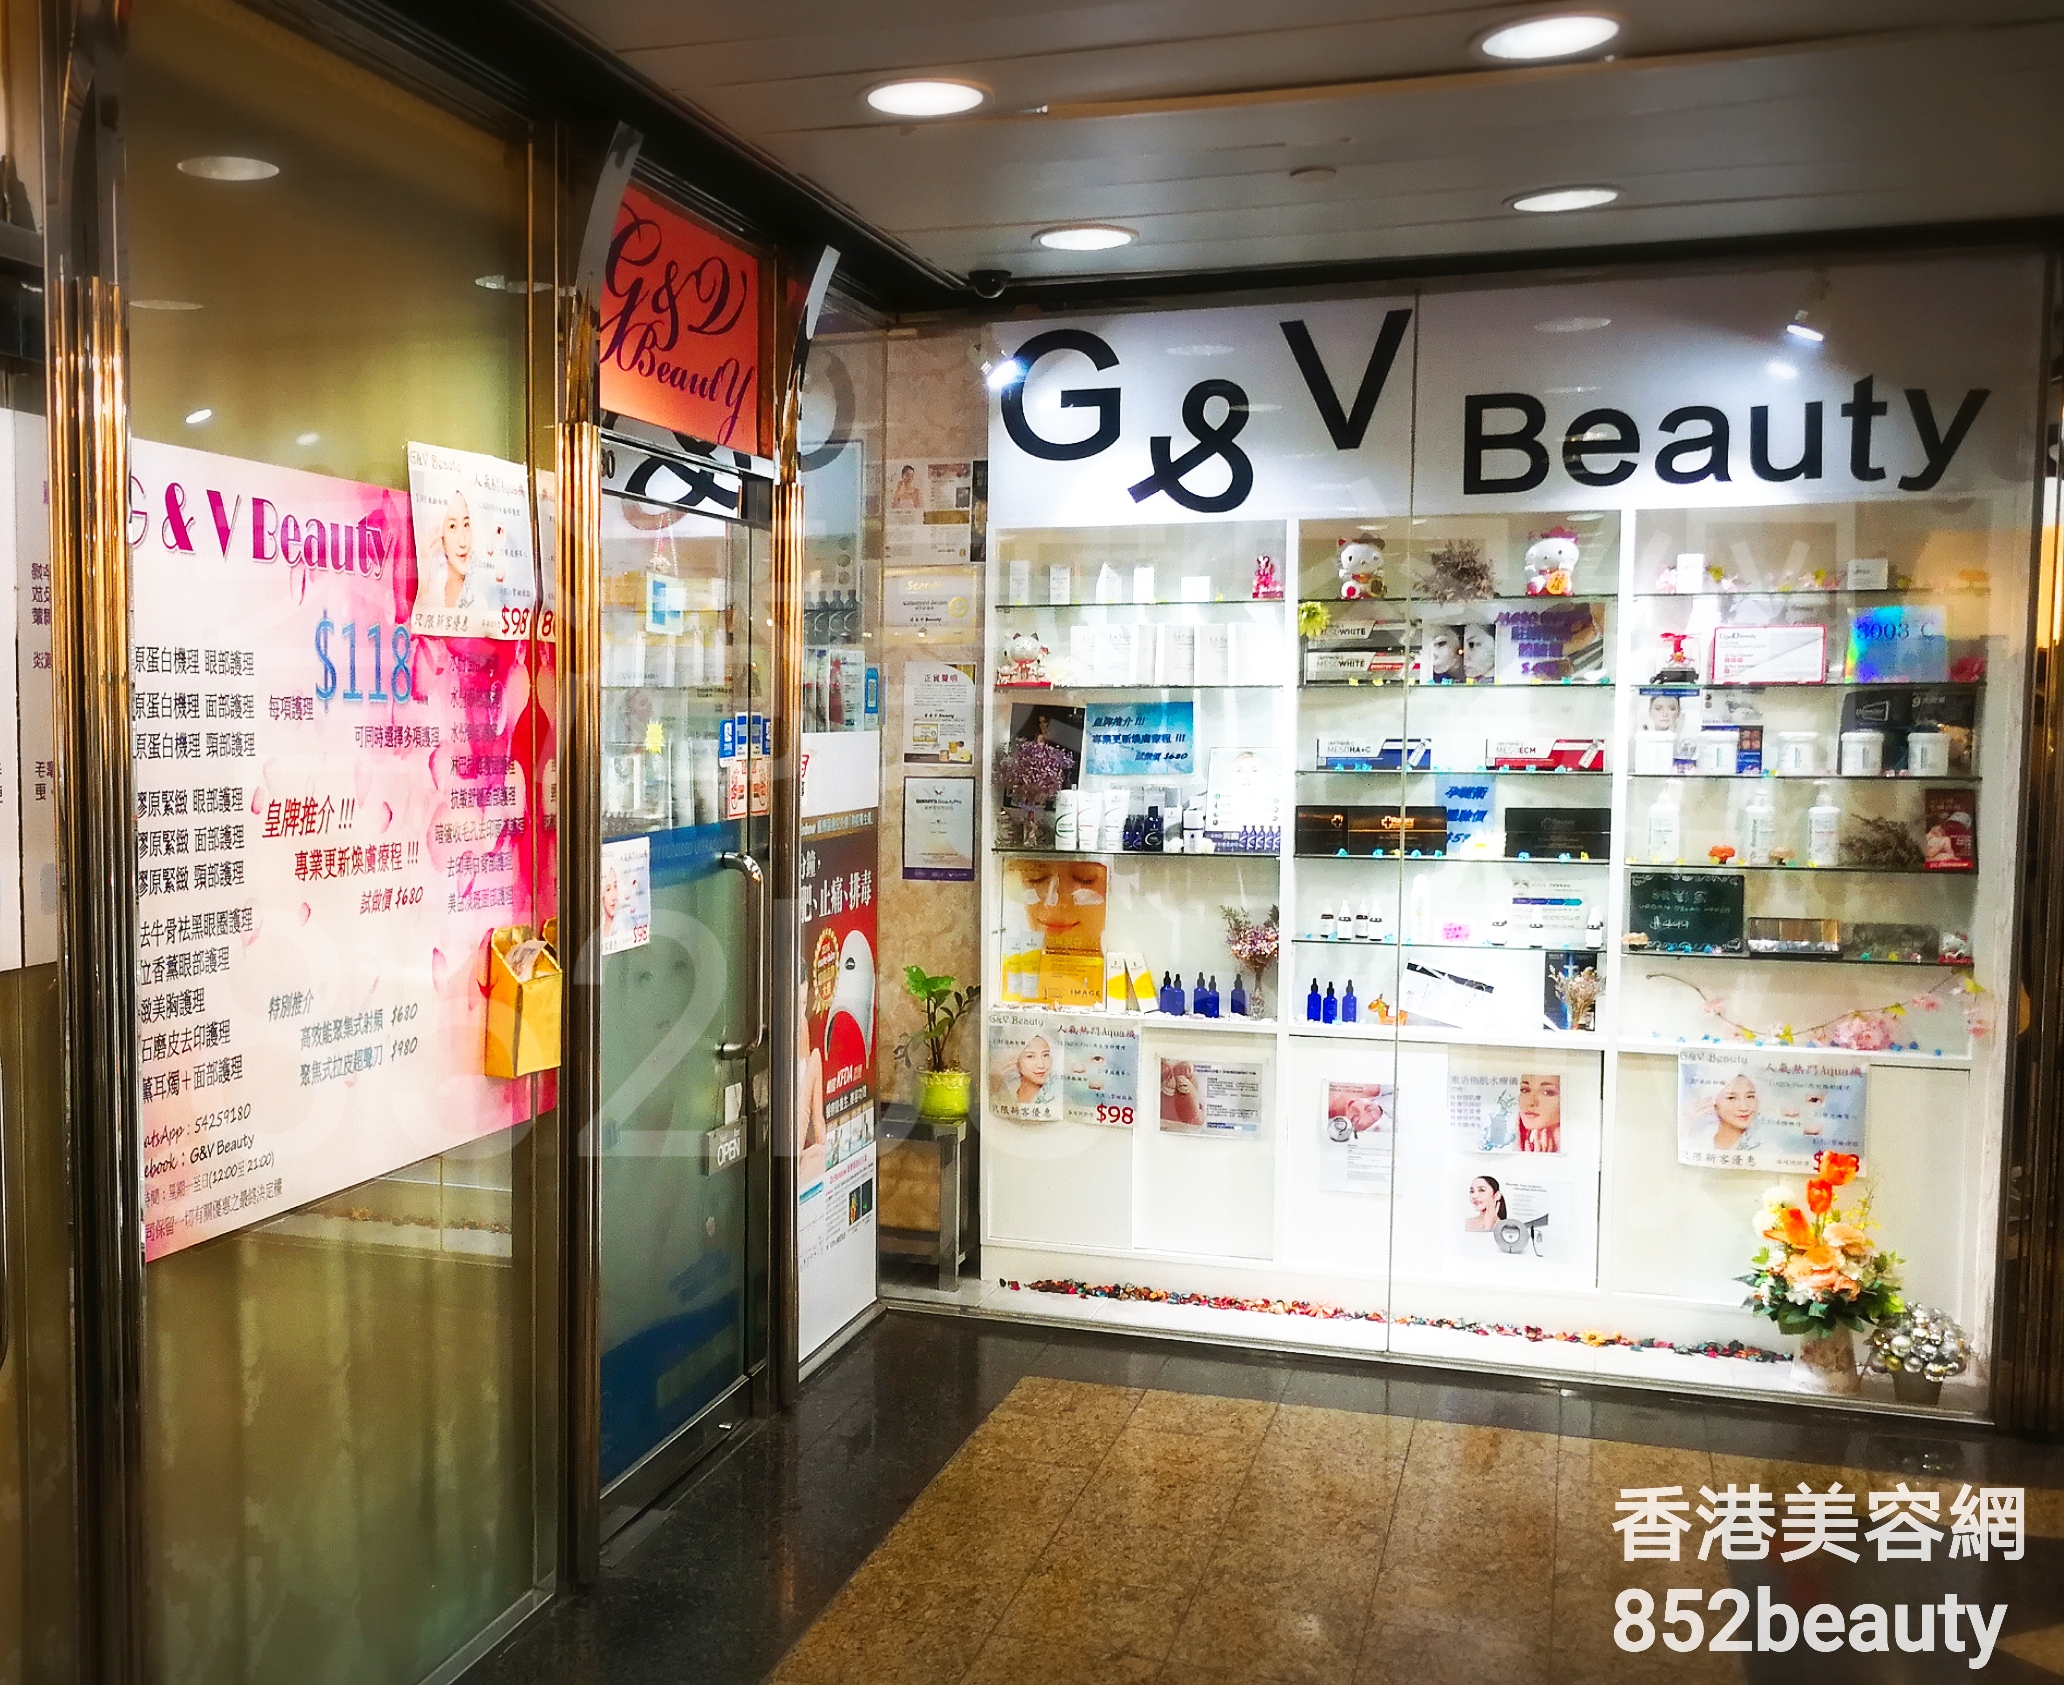 Eye Care: G&V Beauty